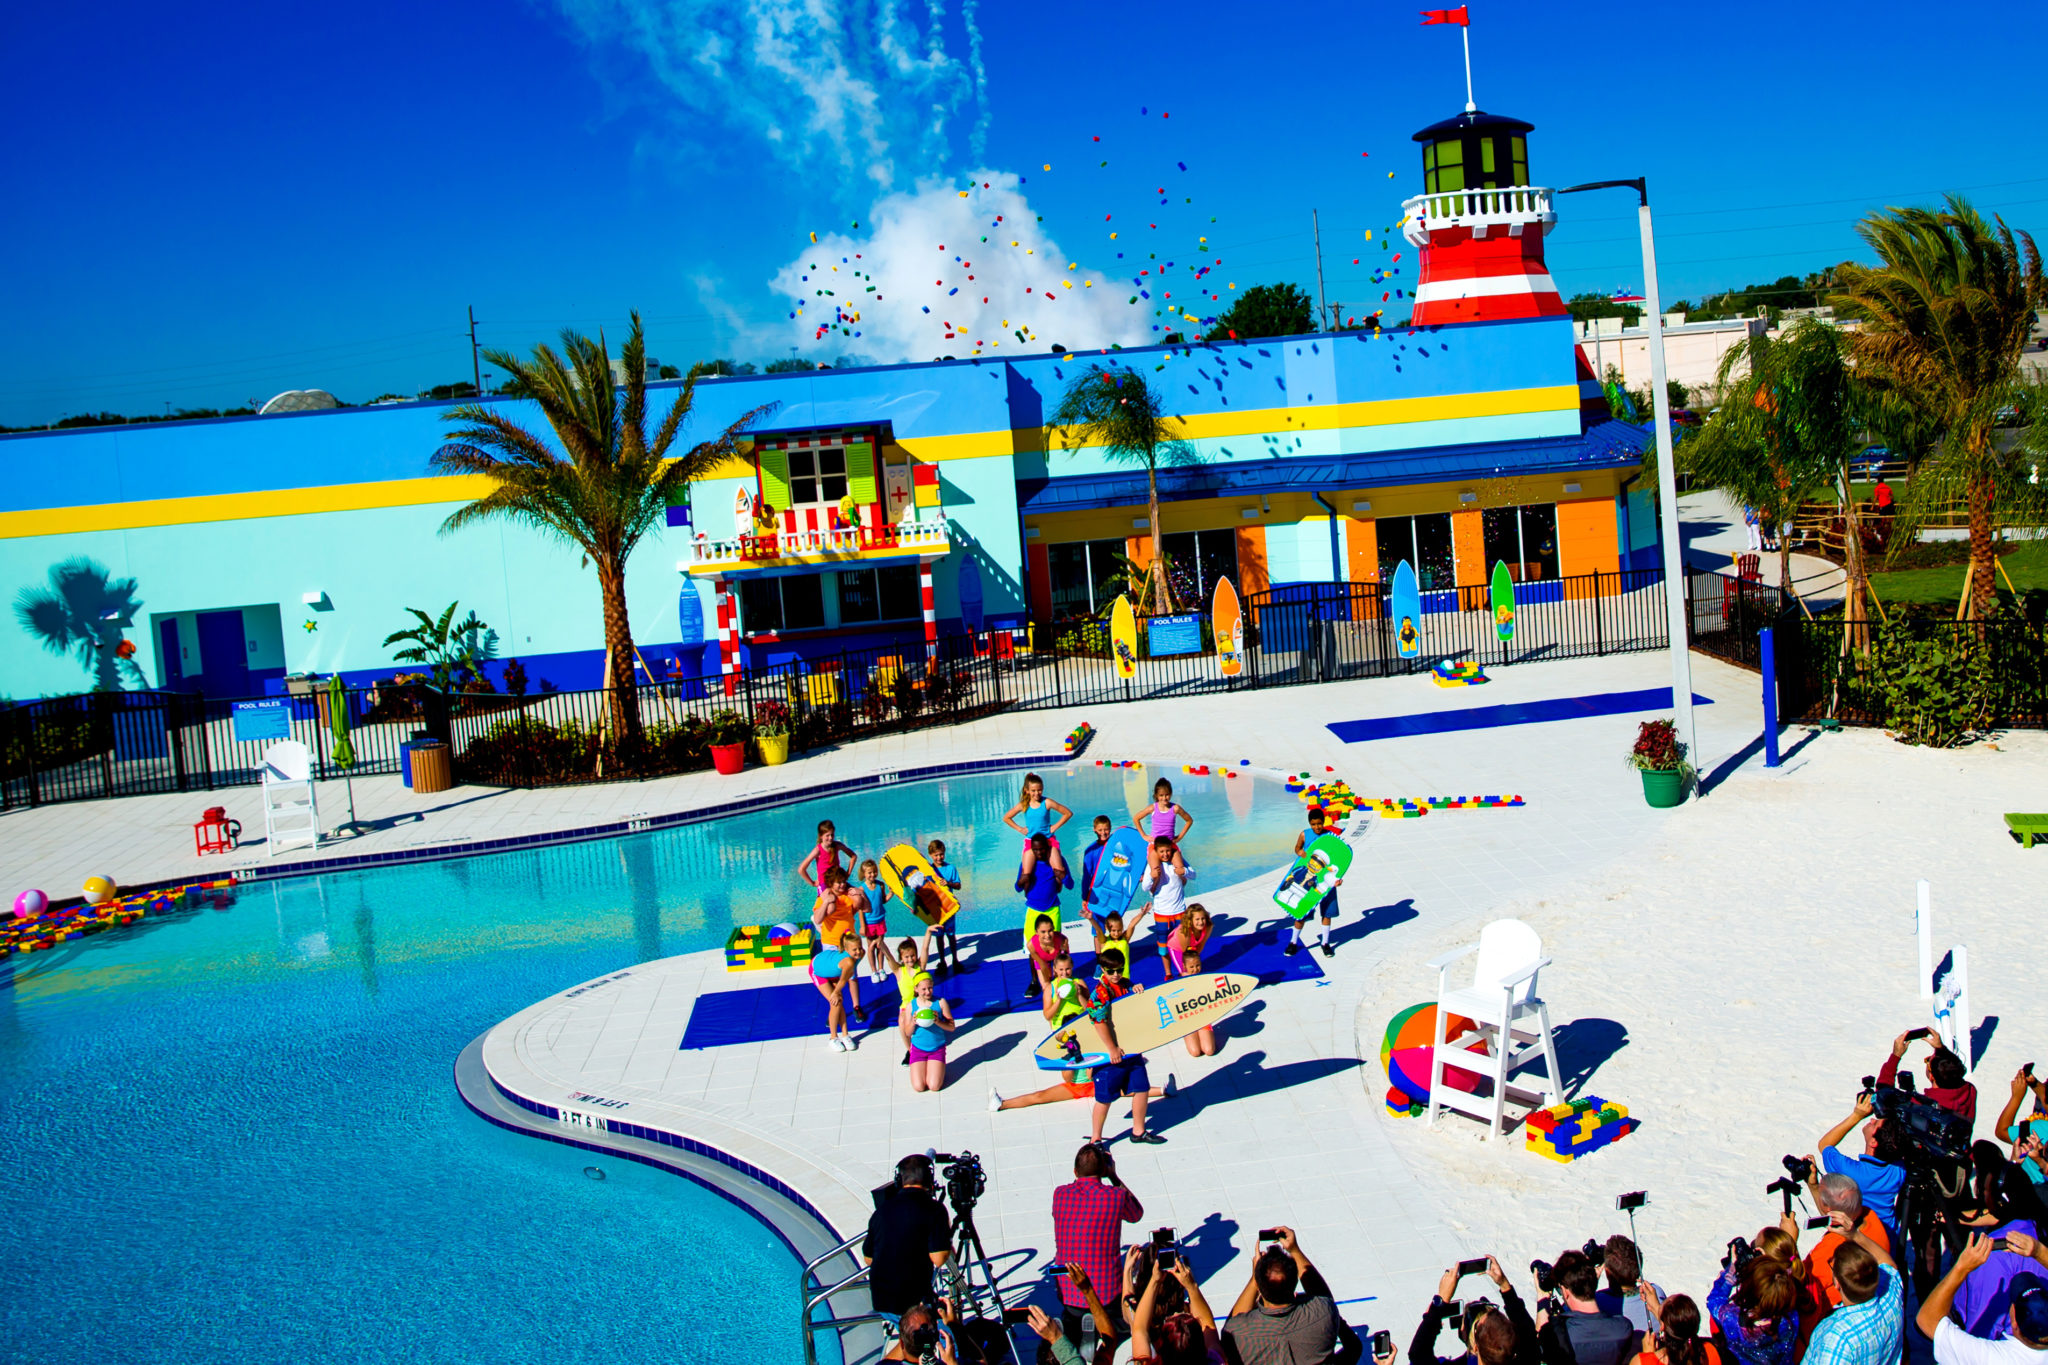 Endless Fun In The Sun Awaits At All New Legoland Florida Resort Beach